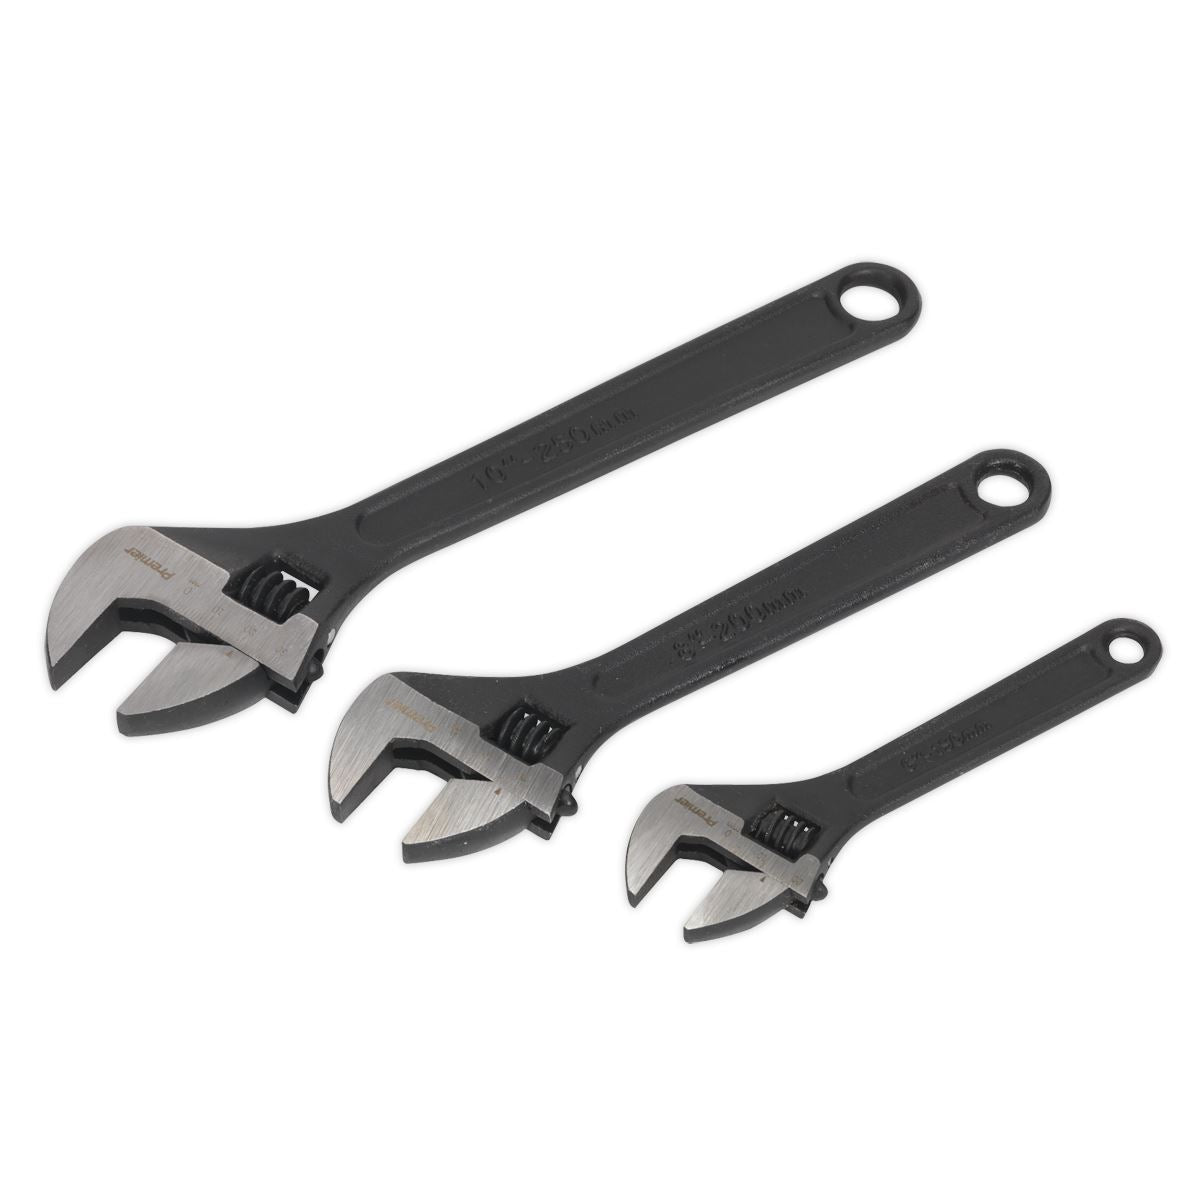 Sealey Premier Adjustable Wrench Set 3pc